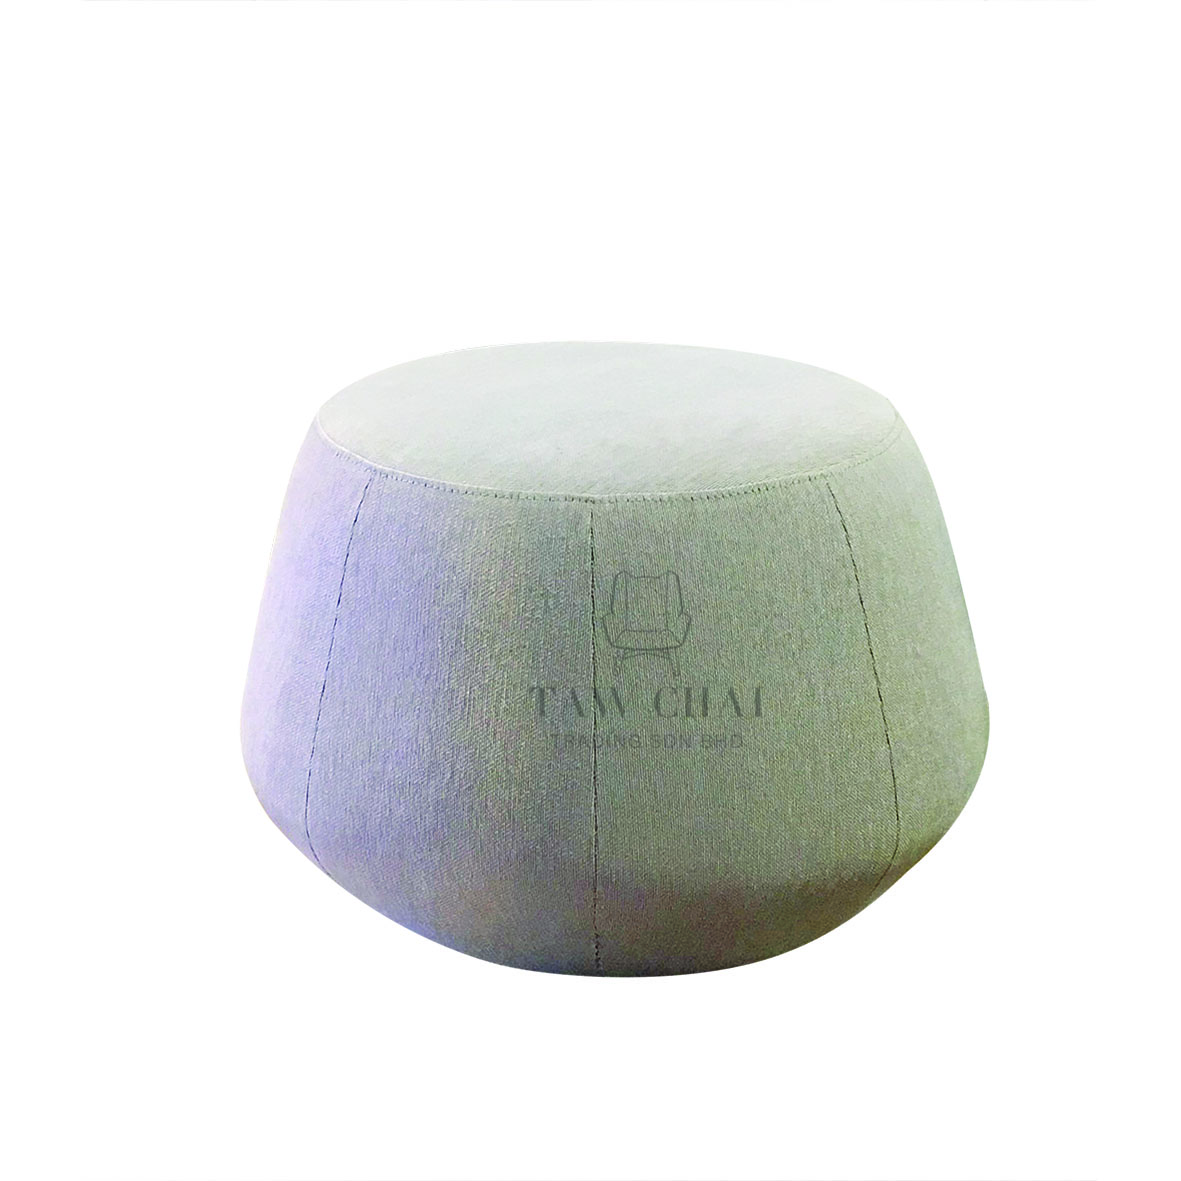 Taw Chai Furniture Product